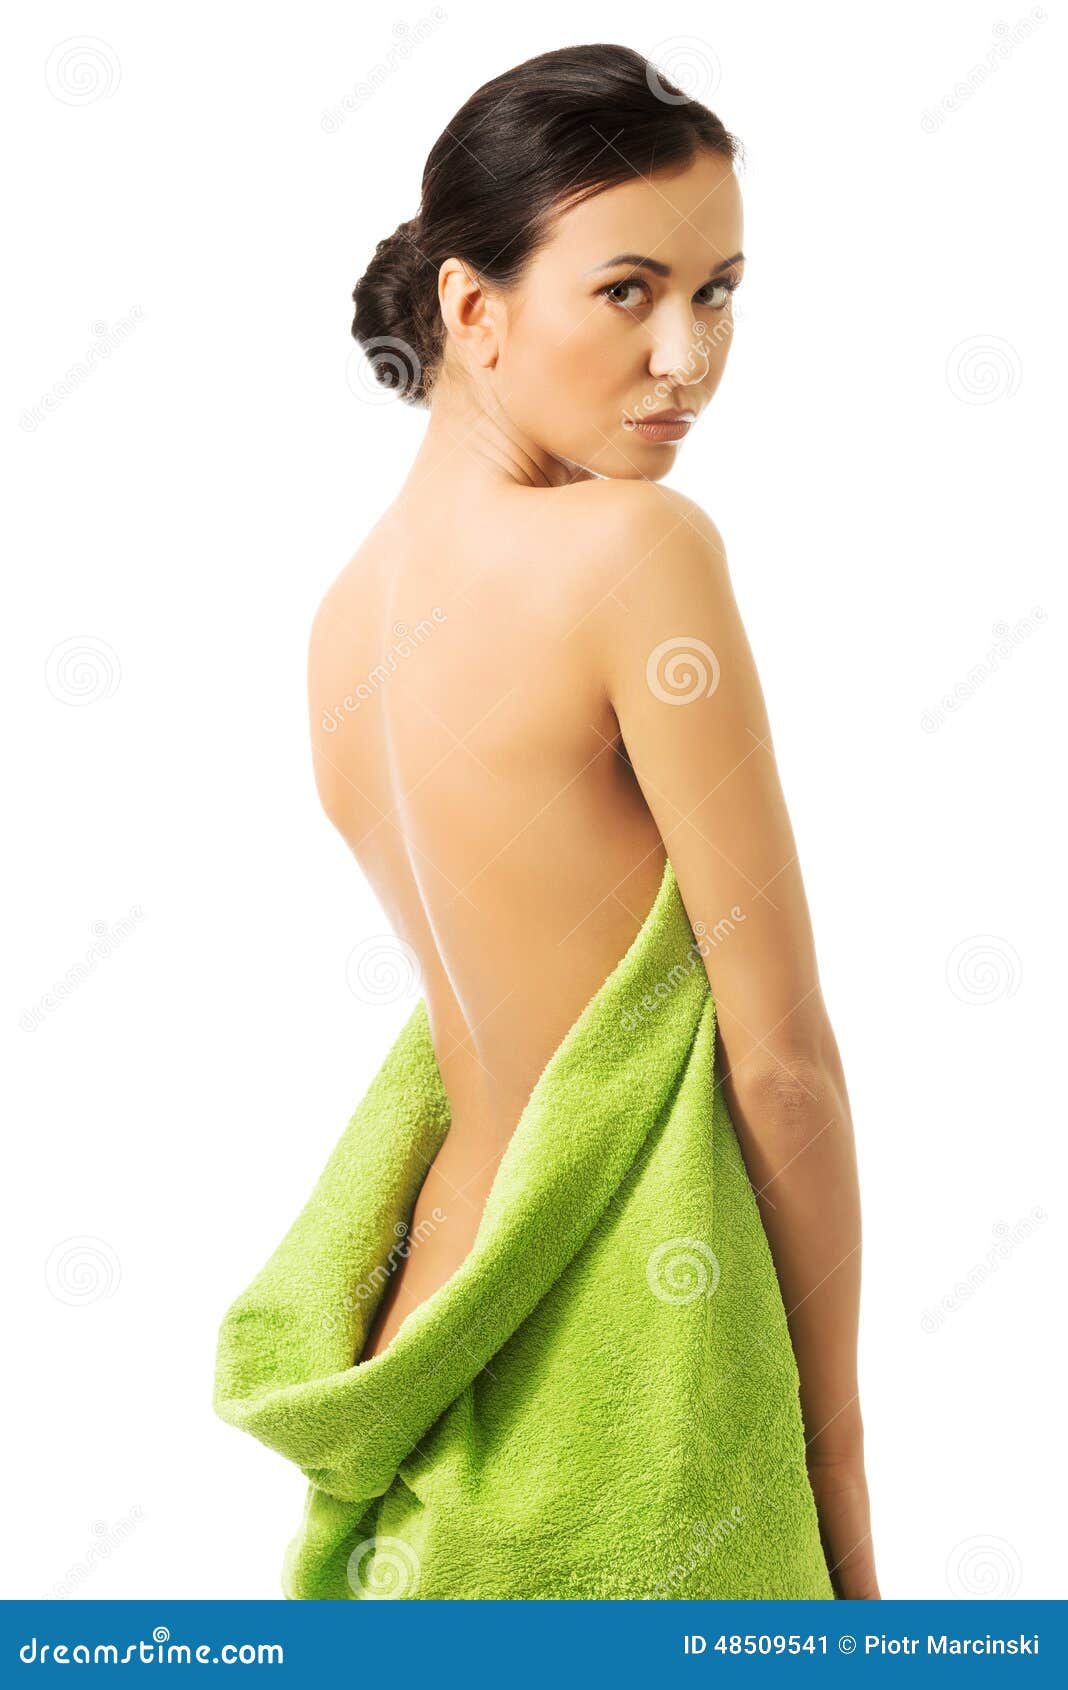 Обернутая полотенцем. Девушка завернутая в полотенце. Девушка в полотенце топлес. Азиатская девушка в полотенце. Девушка брюнетка завернутая в полотенце.